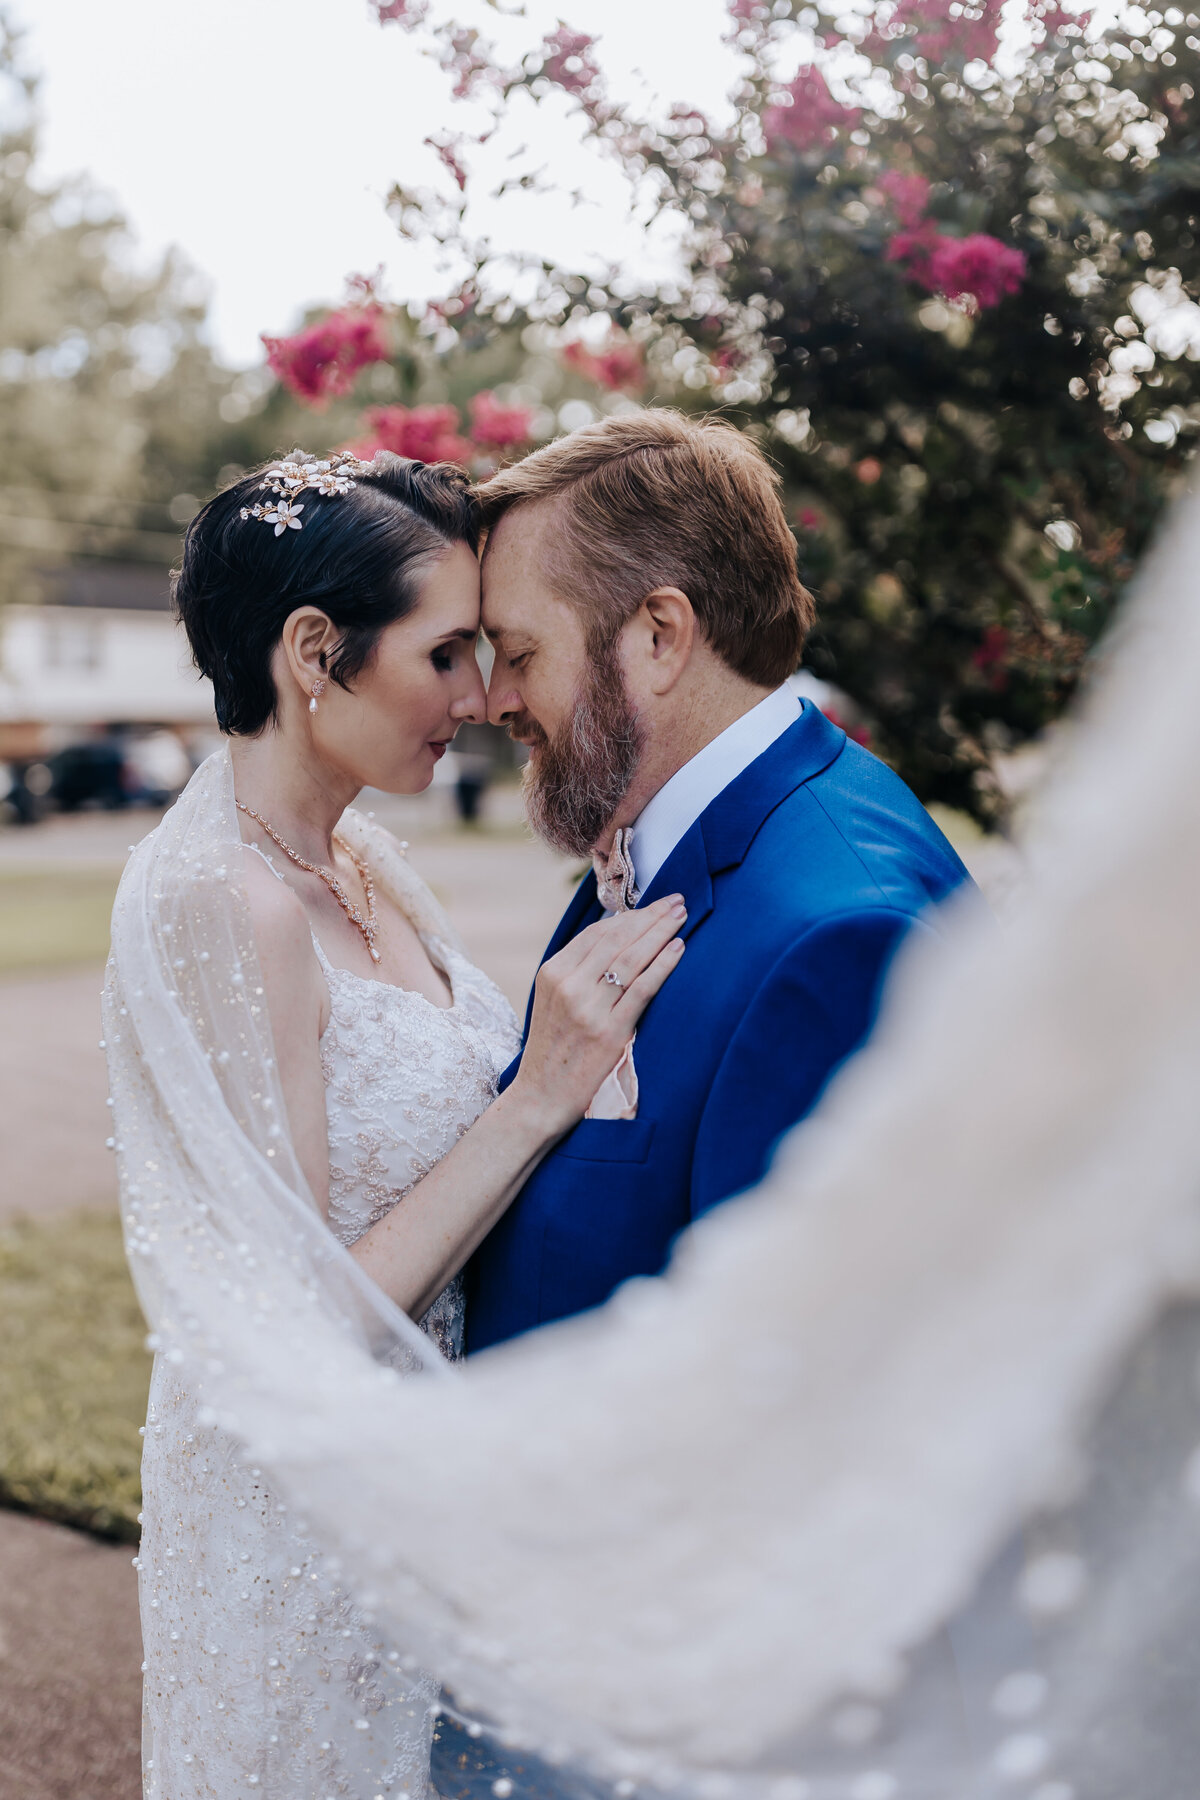 Nashville wedding photographer captures bride and groom nose to nose